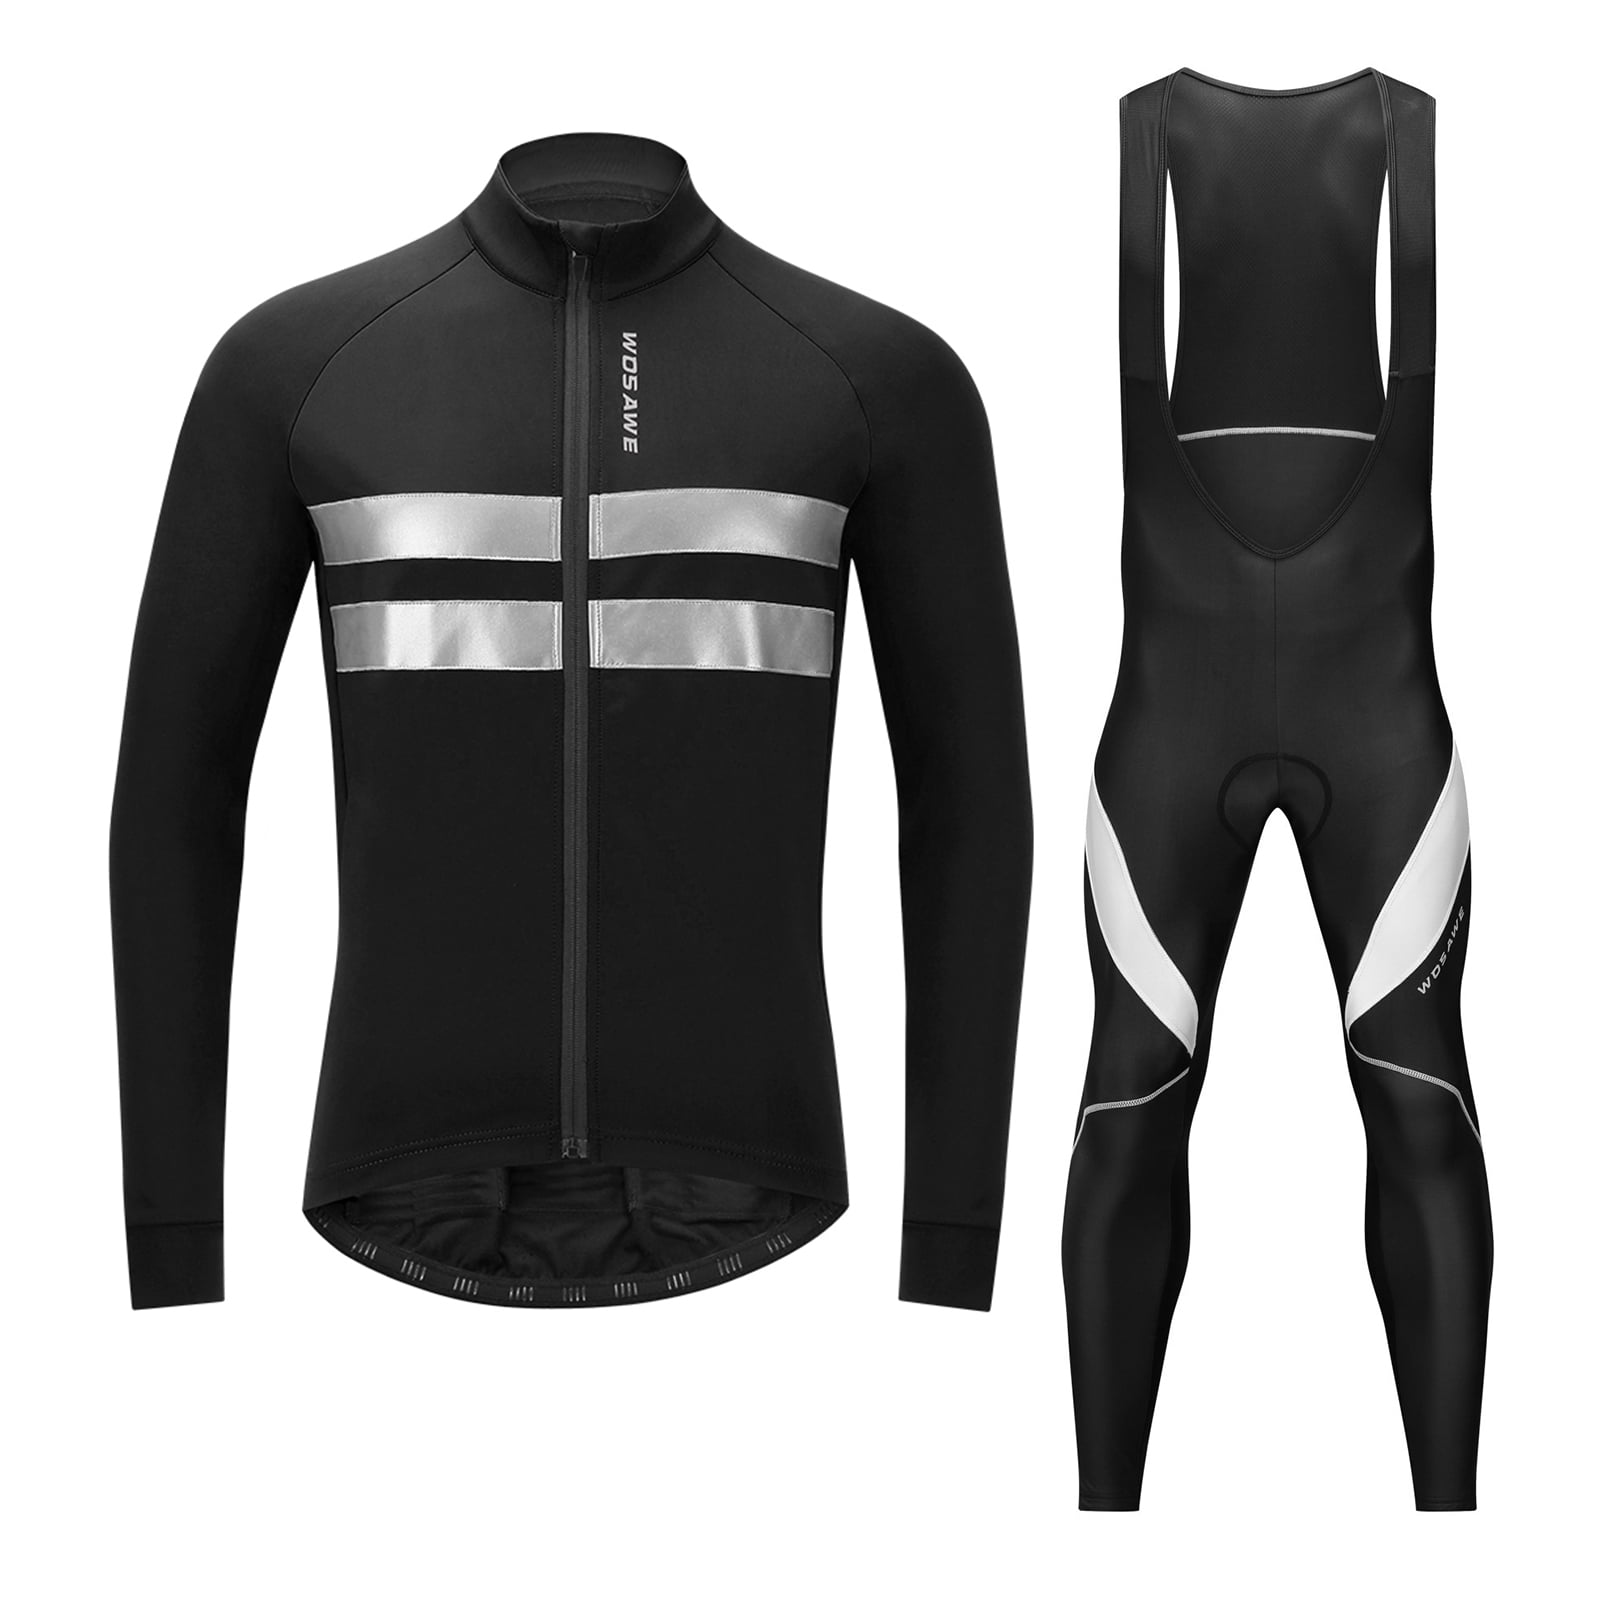 Bib Tights Men’s Urban Cycling Team Thermal Winter Fleece Jersey Long Sleeve and Winter Cycling Set Bundle 